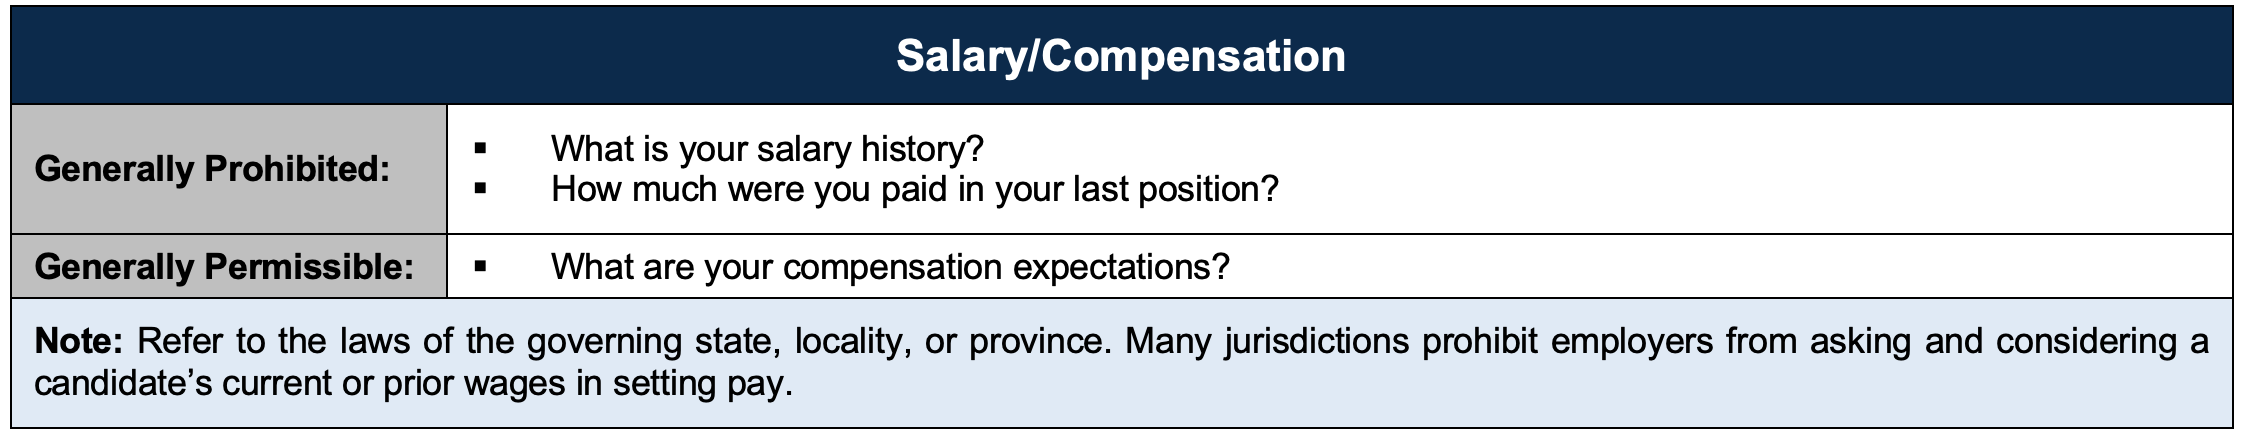 Salary:Compensation